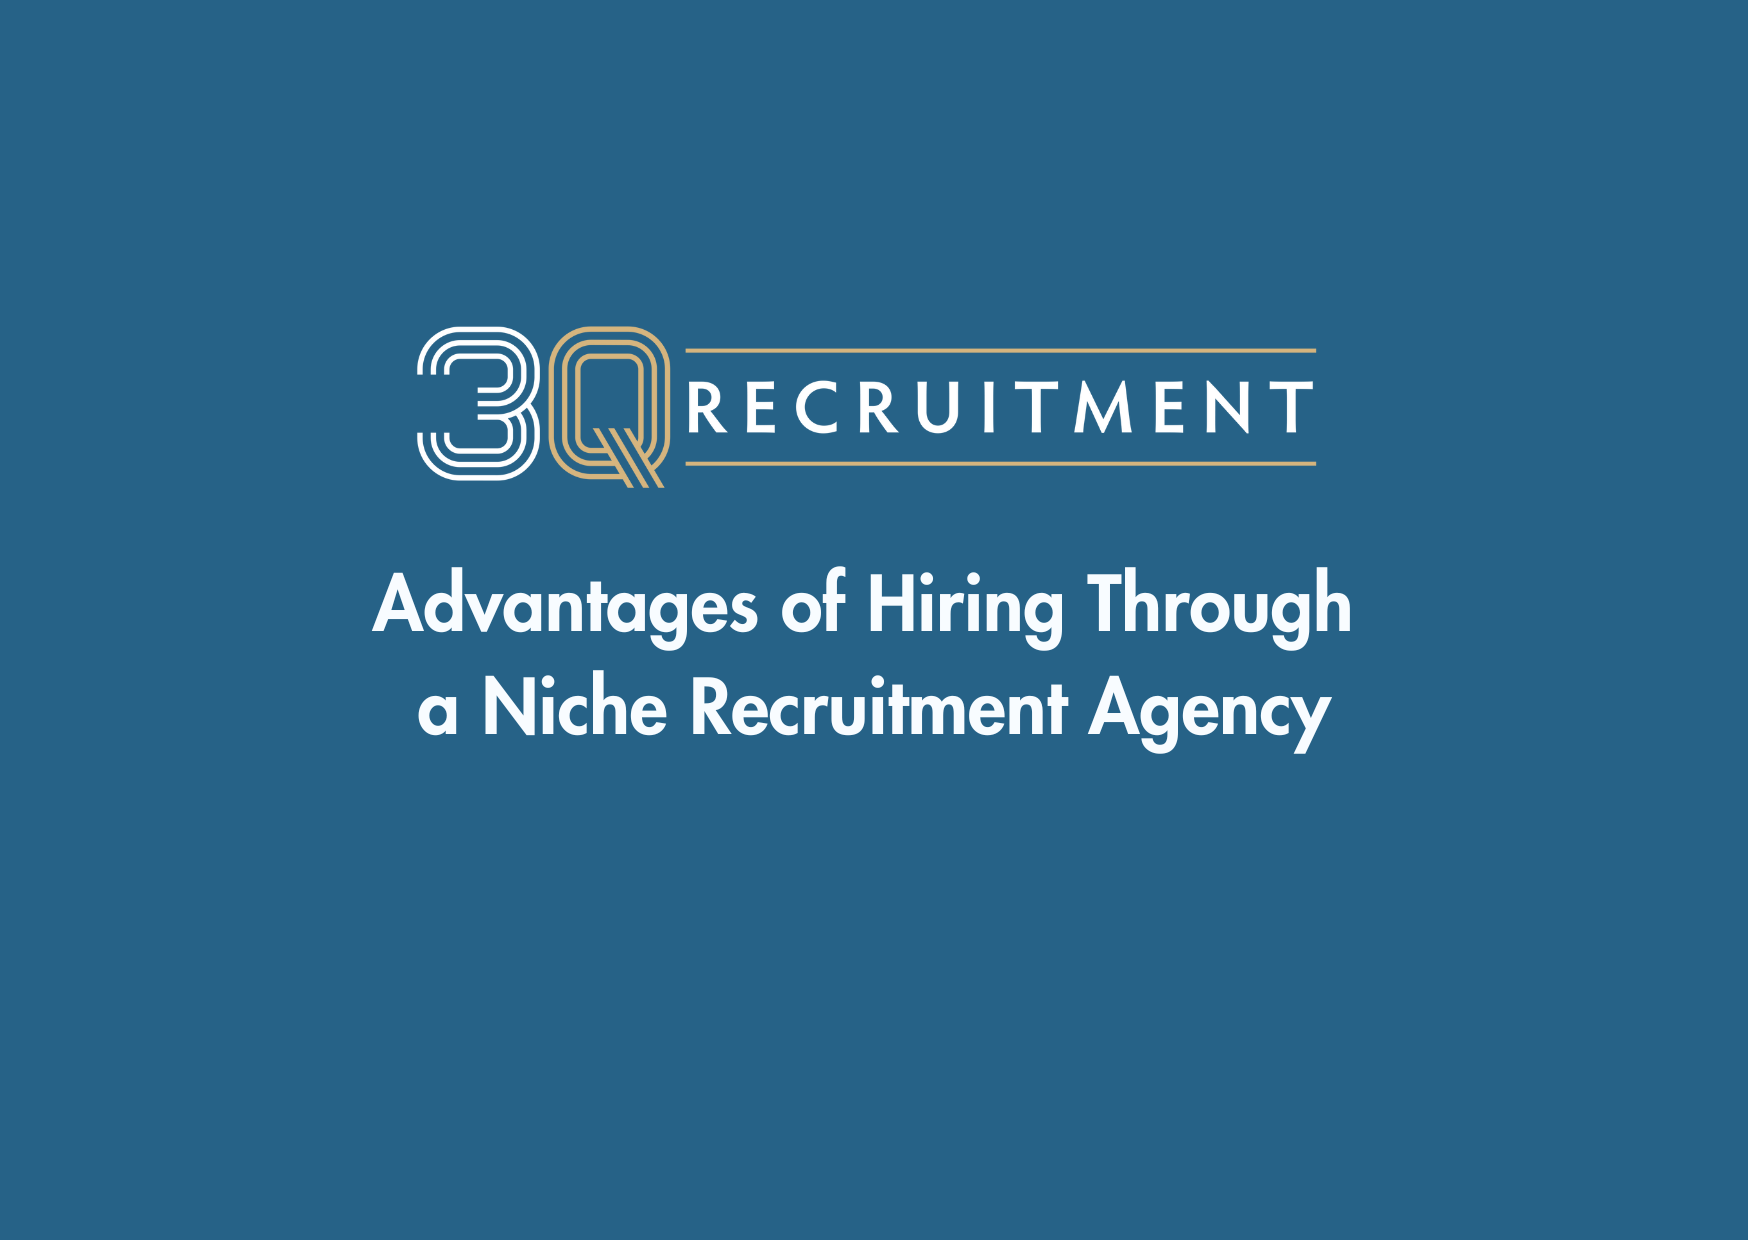 3Q Recruitment Advantages of Hiring Through a Niche Recruitment Agency